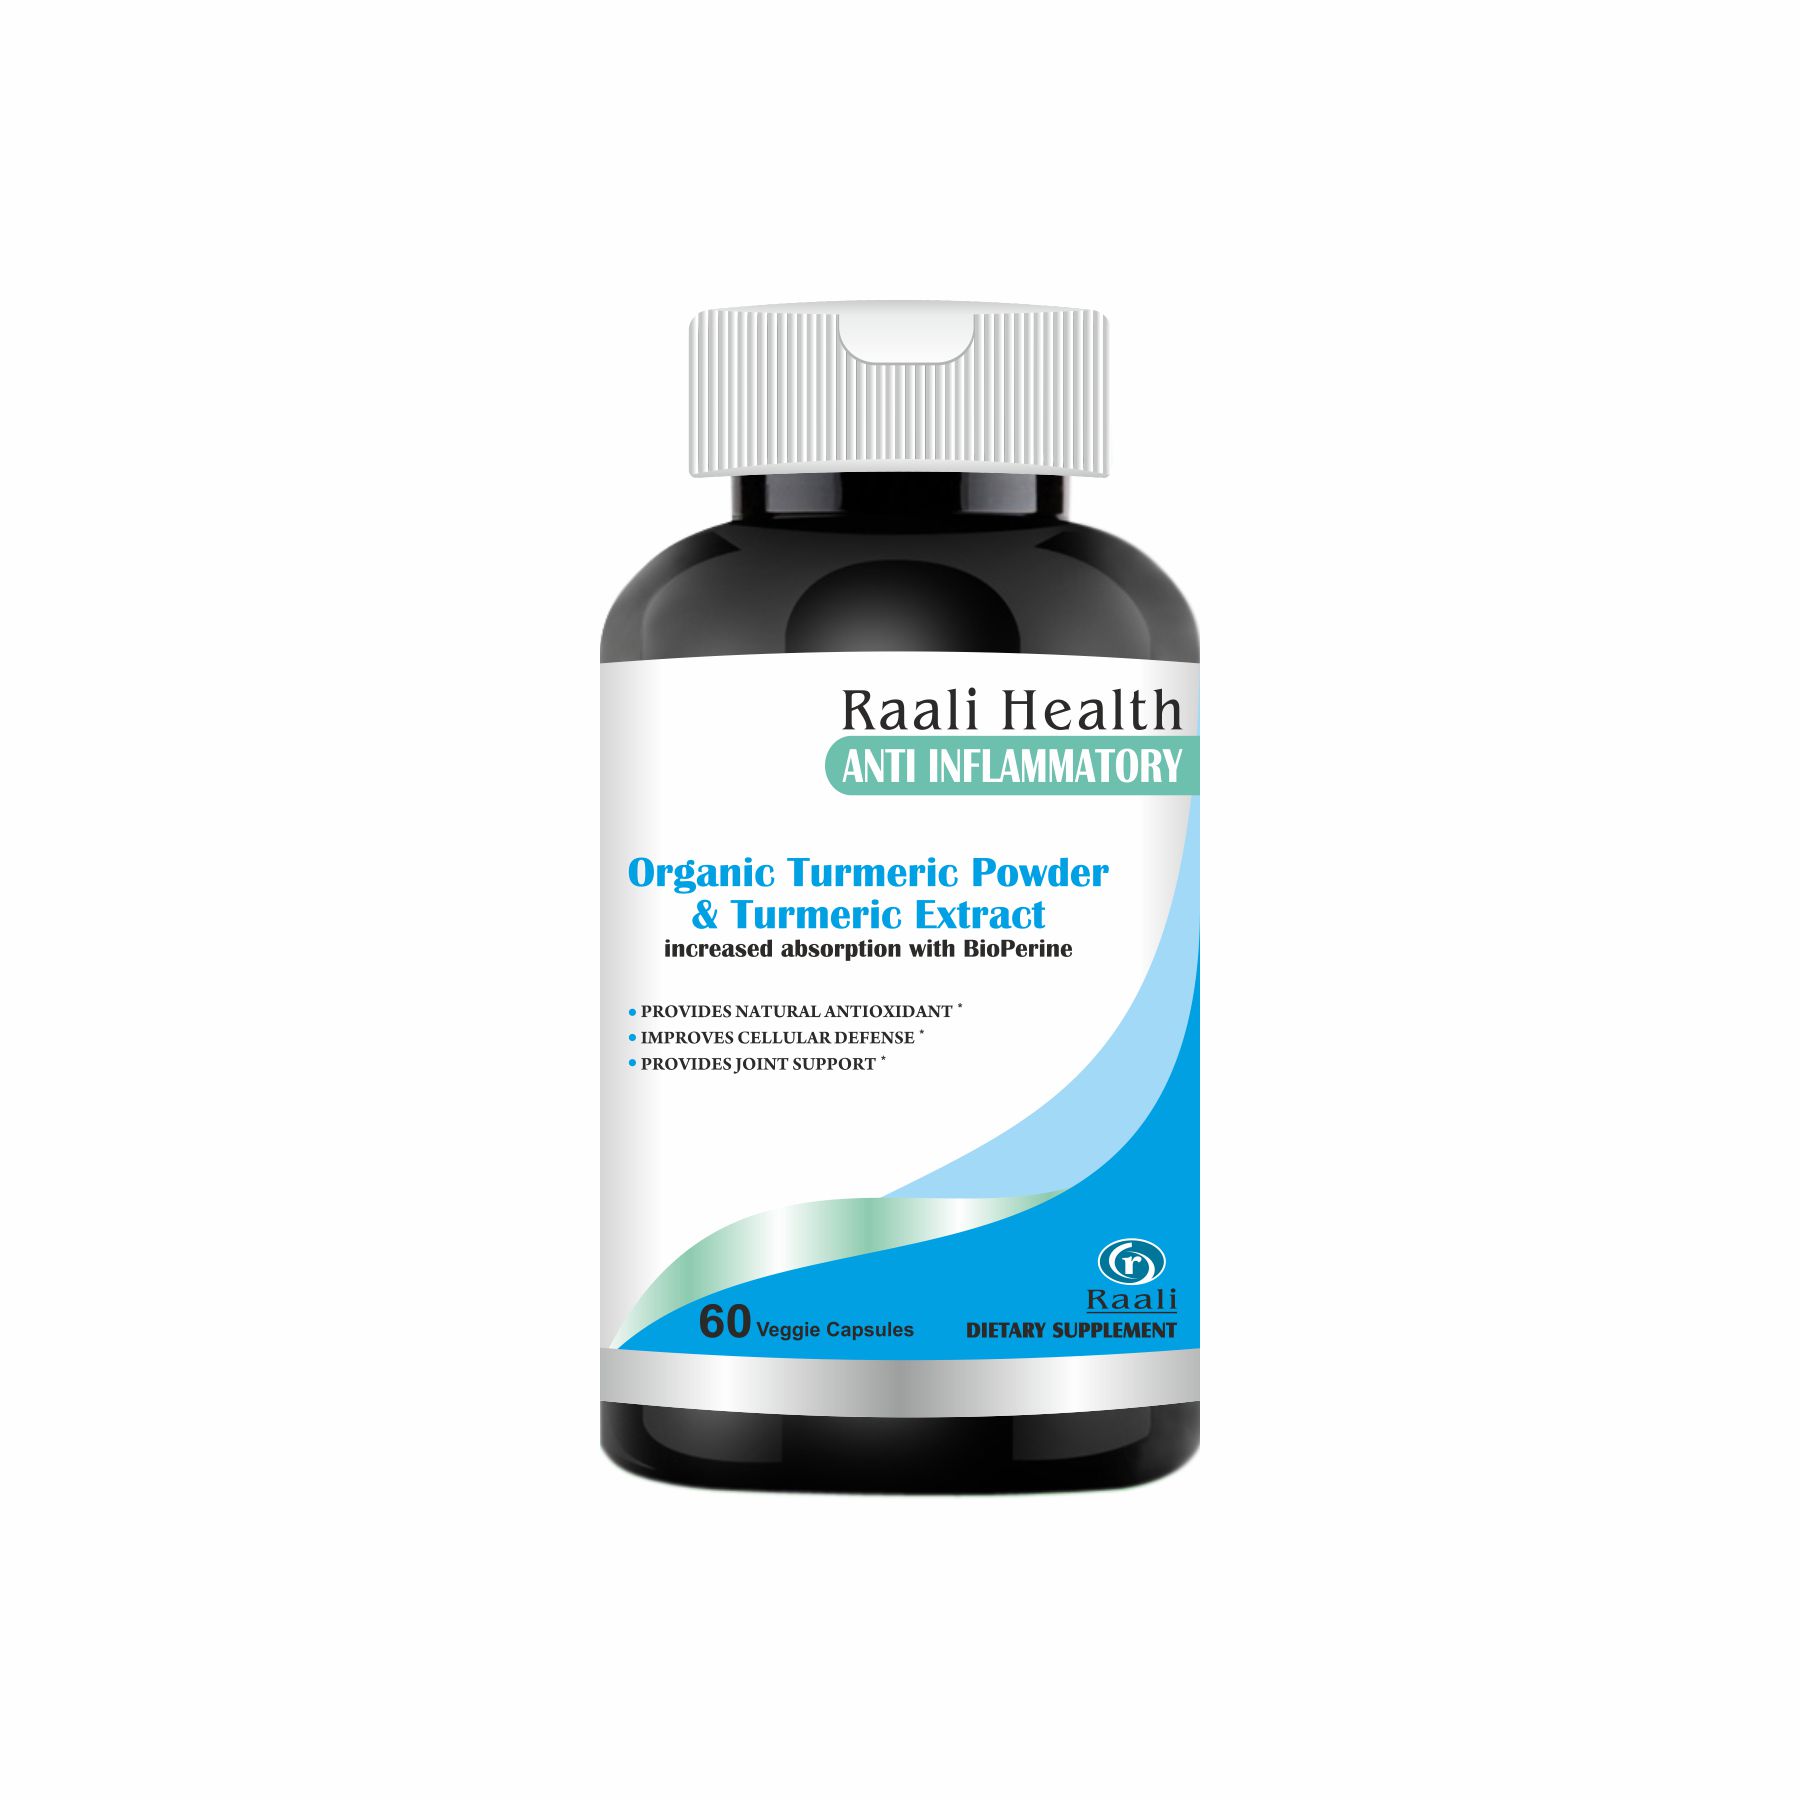 Organic turmeric powder & turmeric extract, anti-inflammatory, natural antioxidant